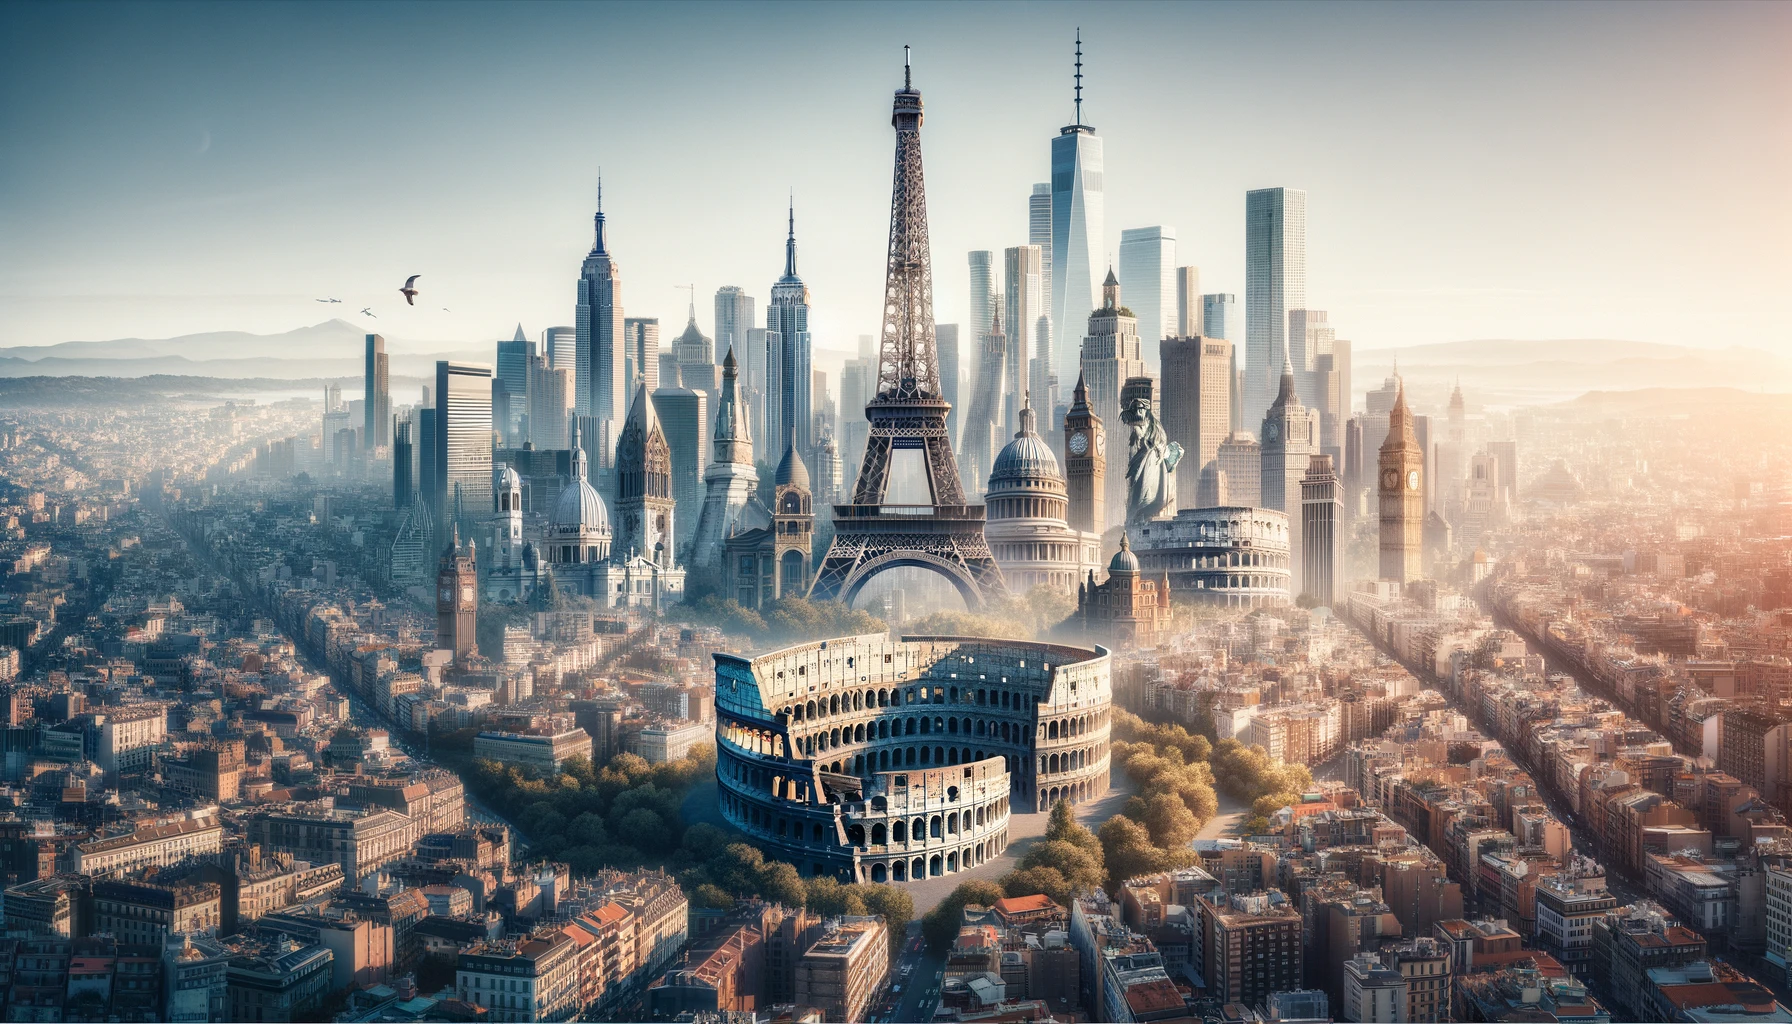 An imaginative cityscape blending iconic landmarks highlighting Nicola Lazzari's AI translation expertise